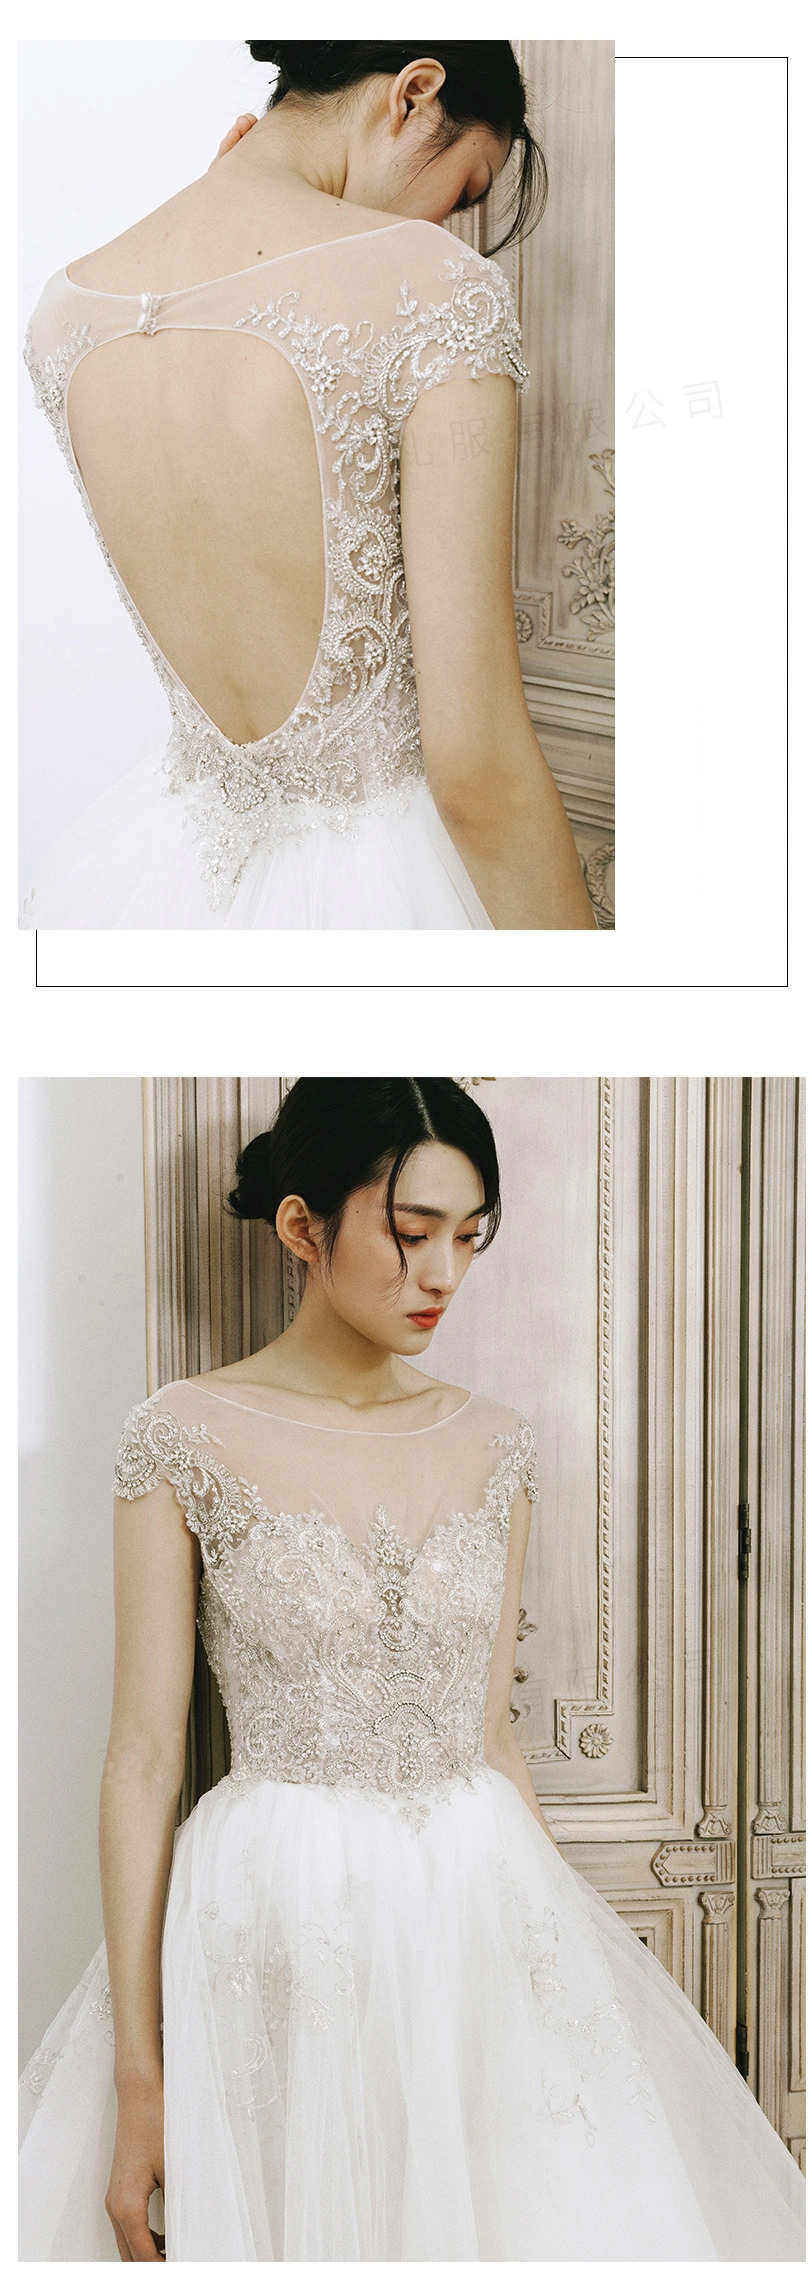 Supplier of Kinds of Fashion Dress, Wedding Dress, Evening Dress, Back Less Tailing Bridal Dress